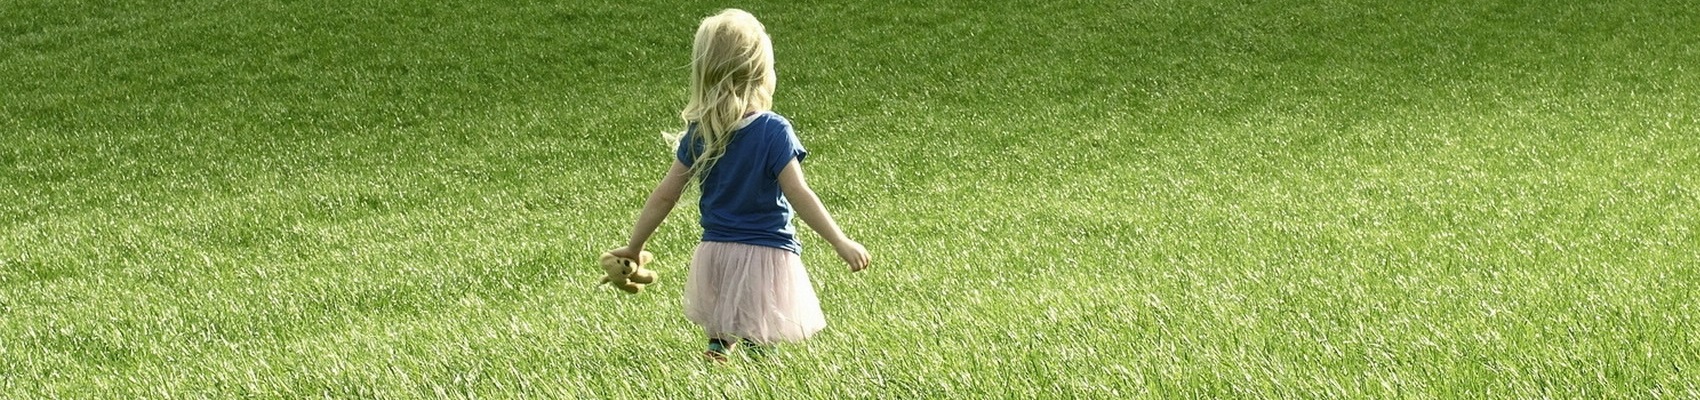 Girl-Child-Field-Grass-Walkv2